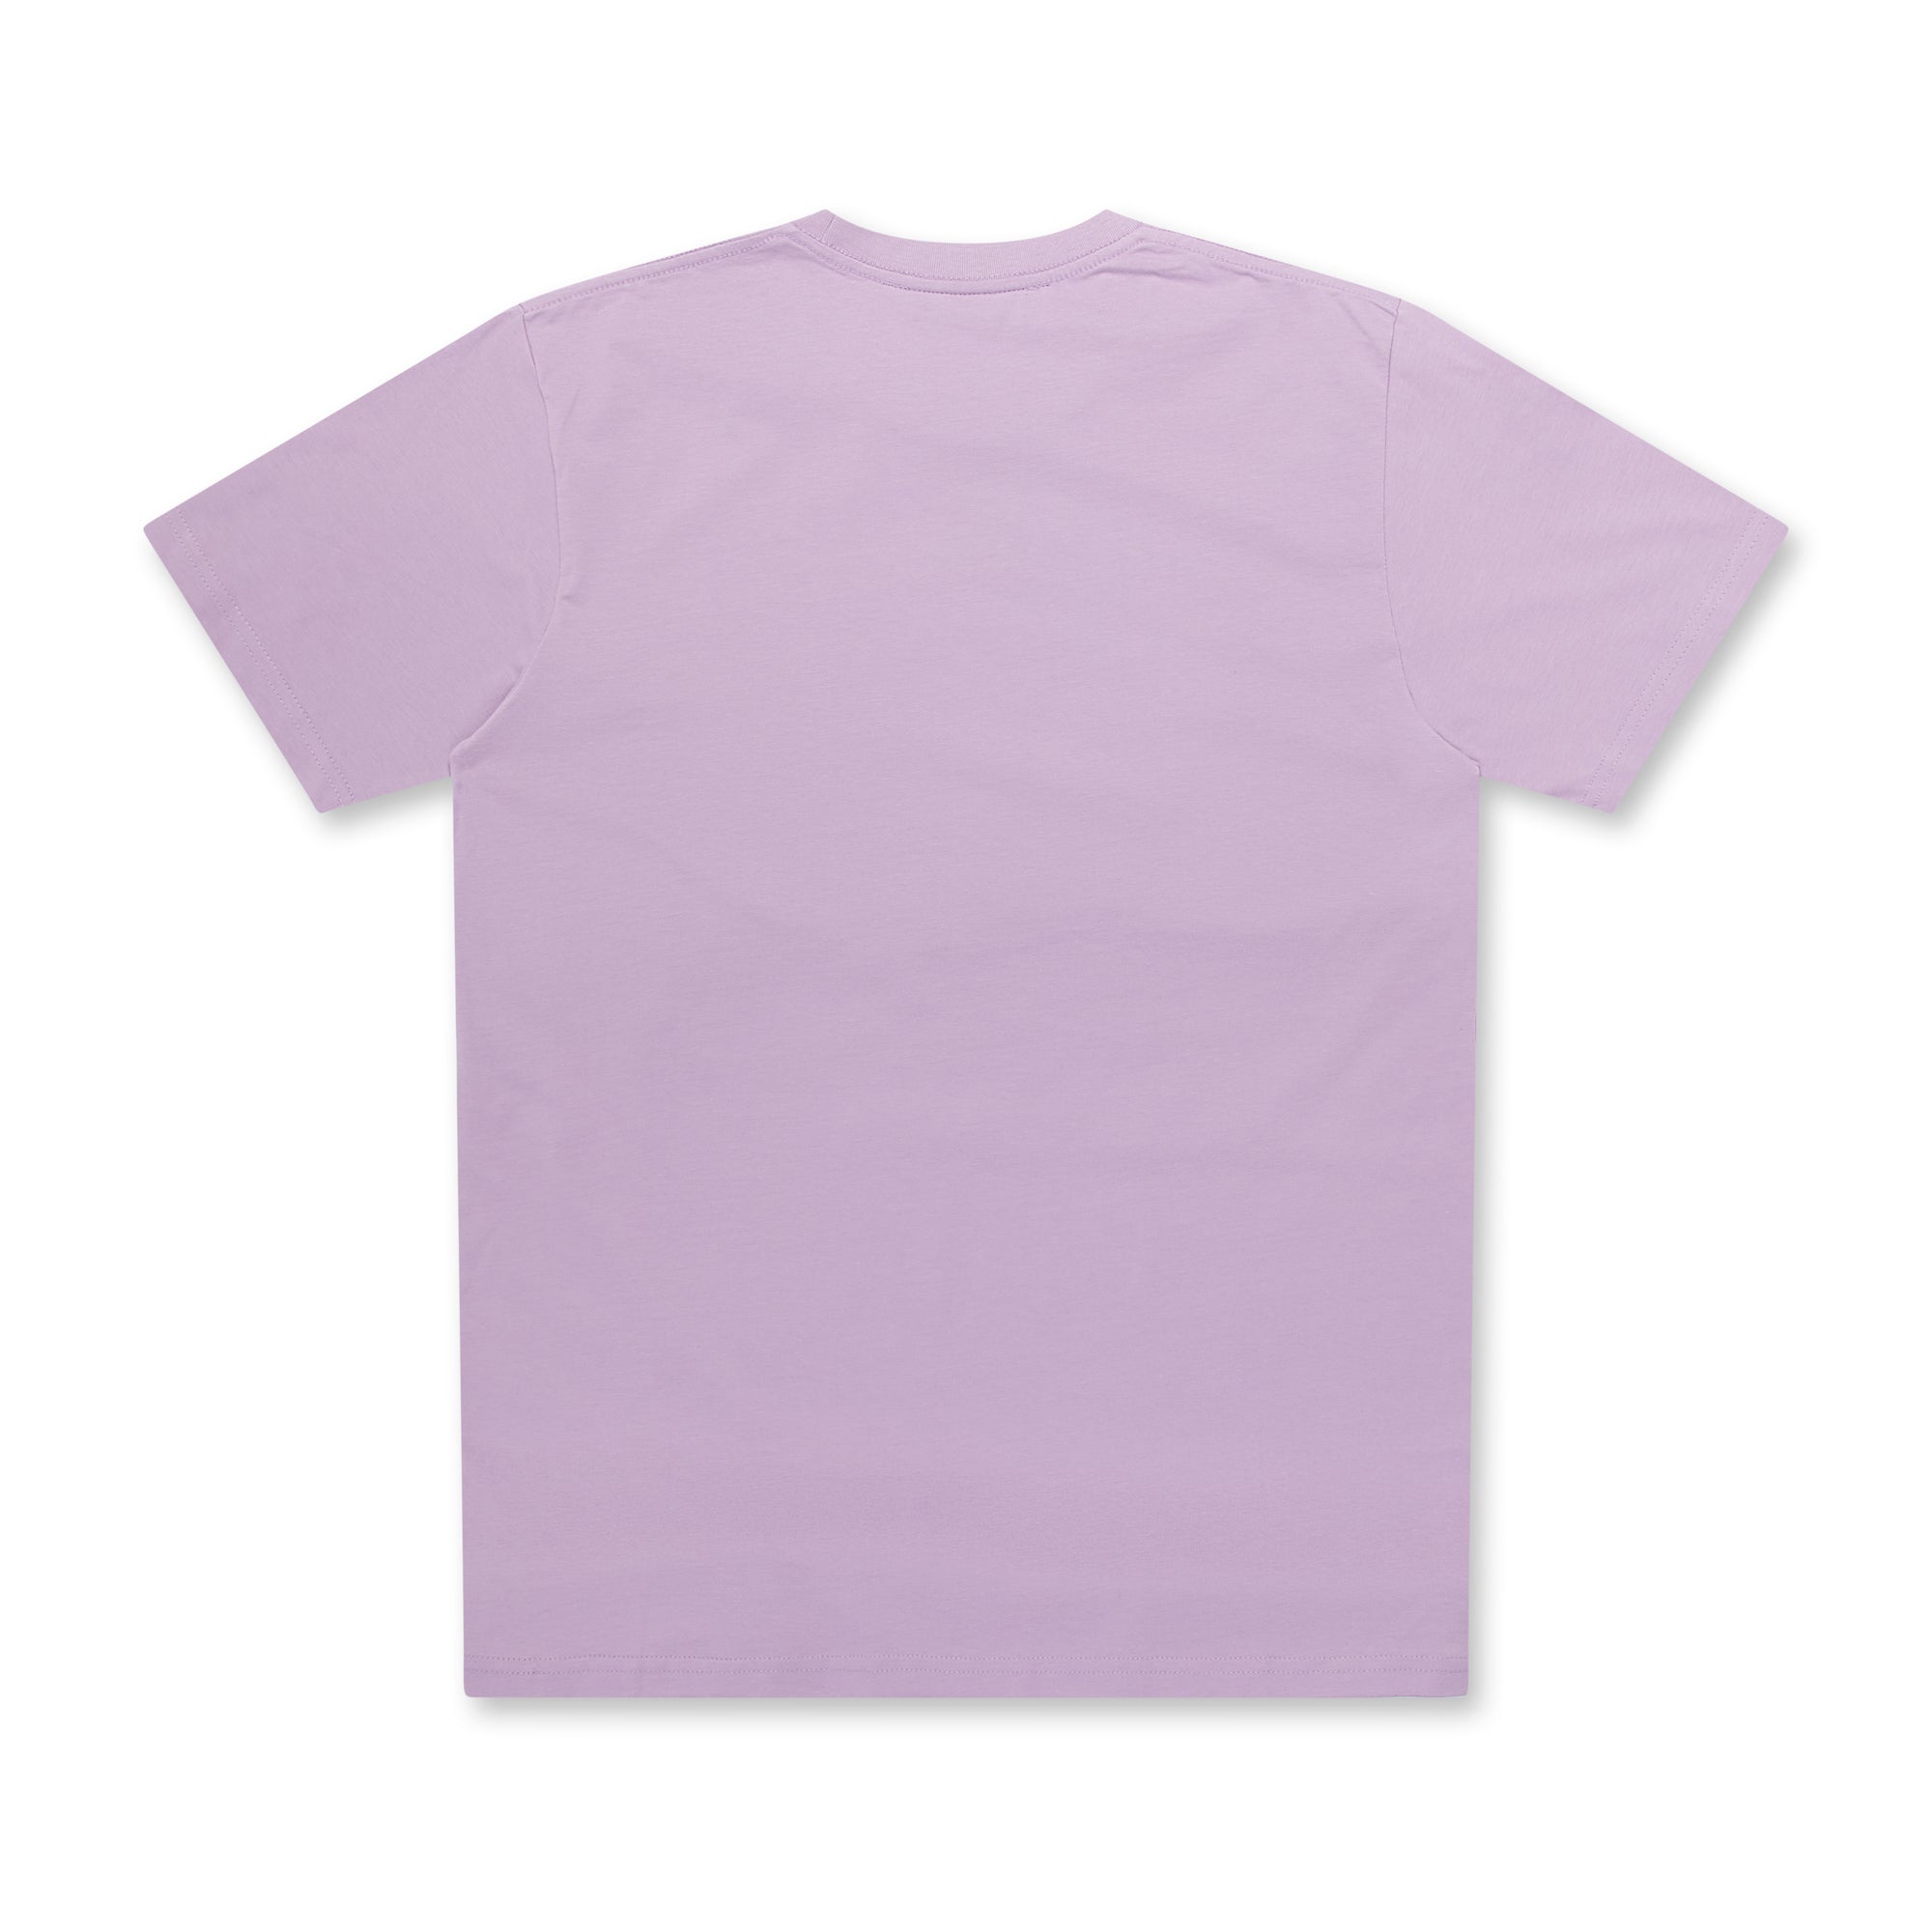 Lifeisunfair - Unrequited T-Shirt - (Lavender) view 2